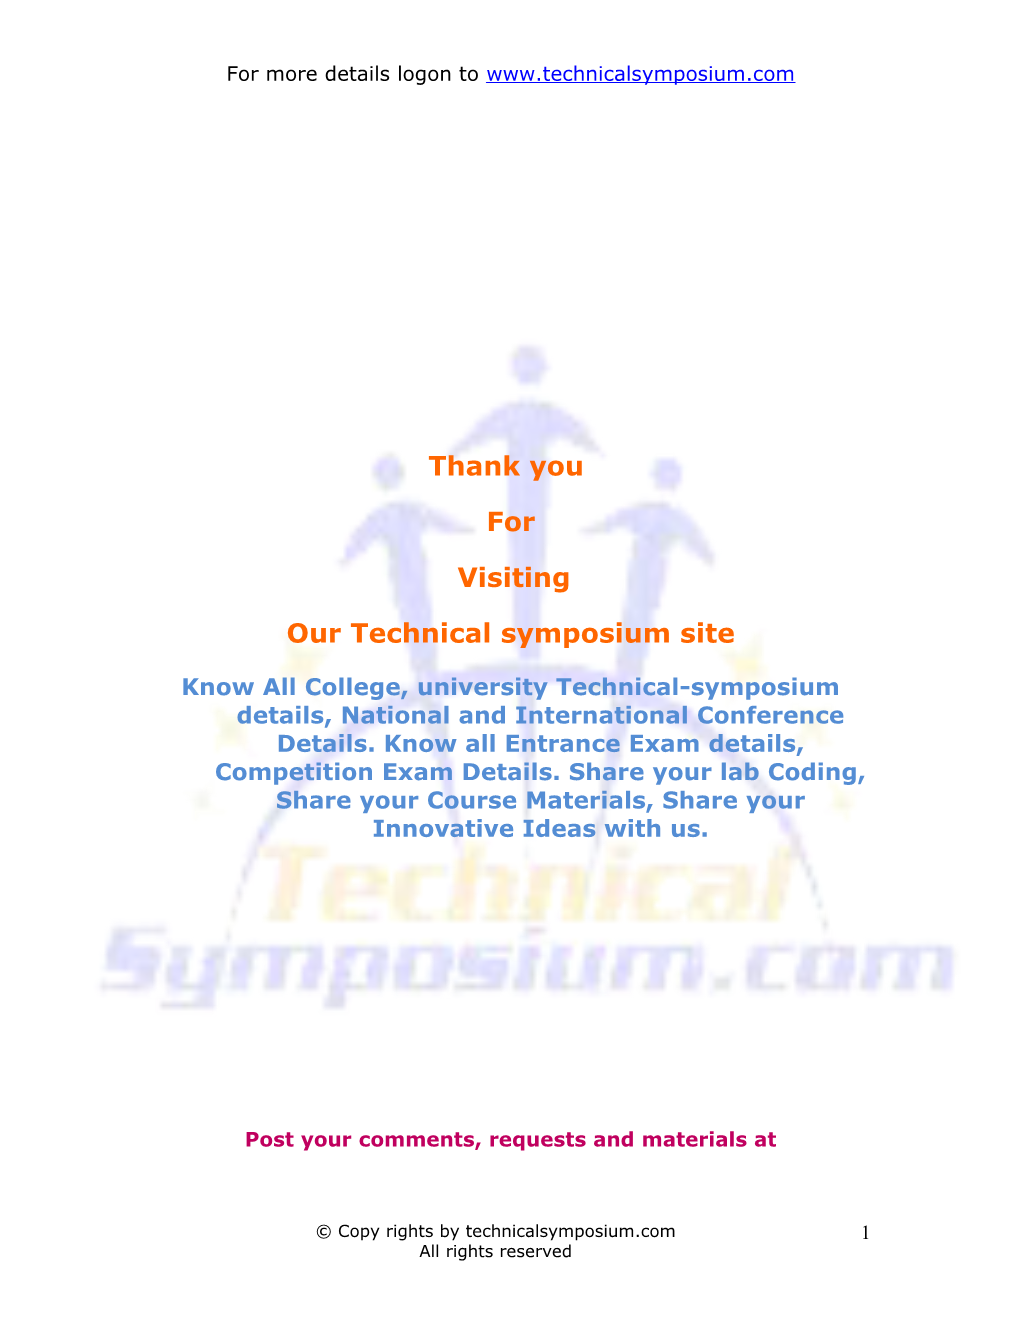 Our Technical Symposium Site